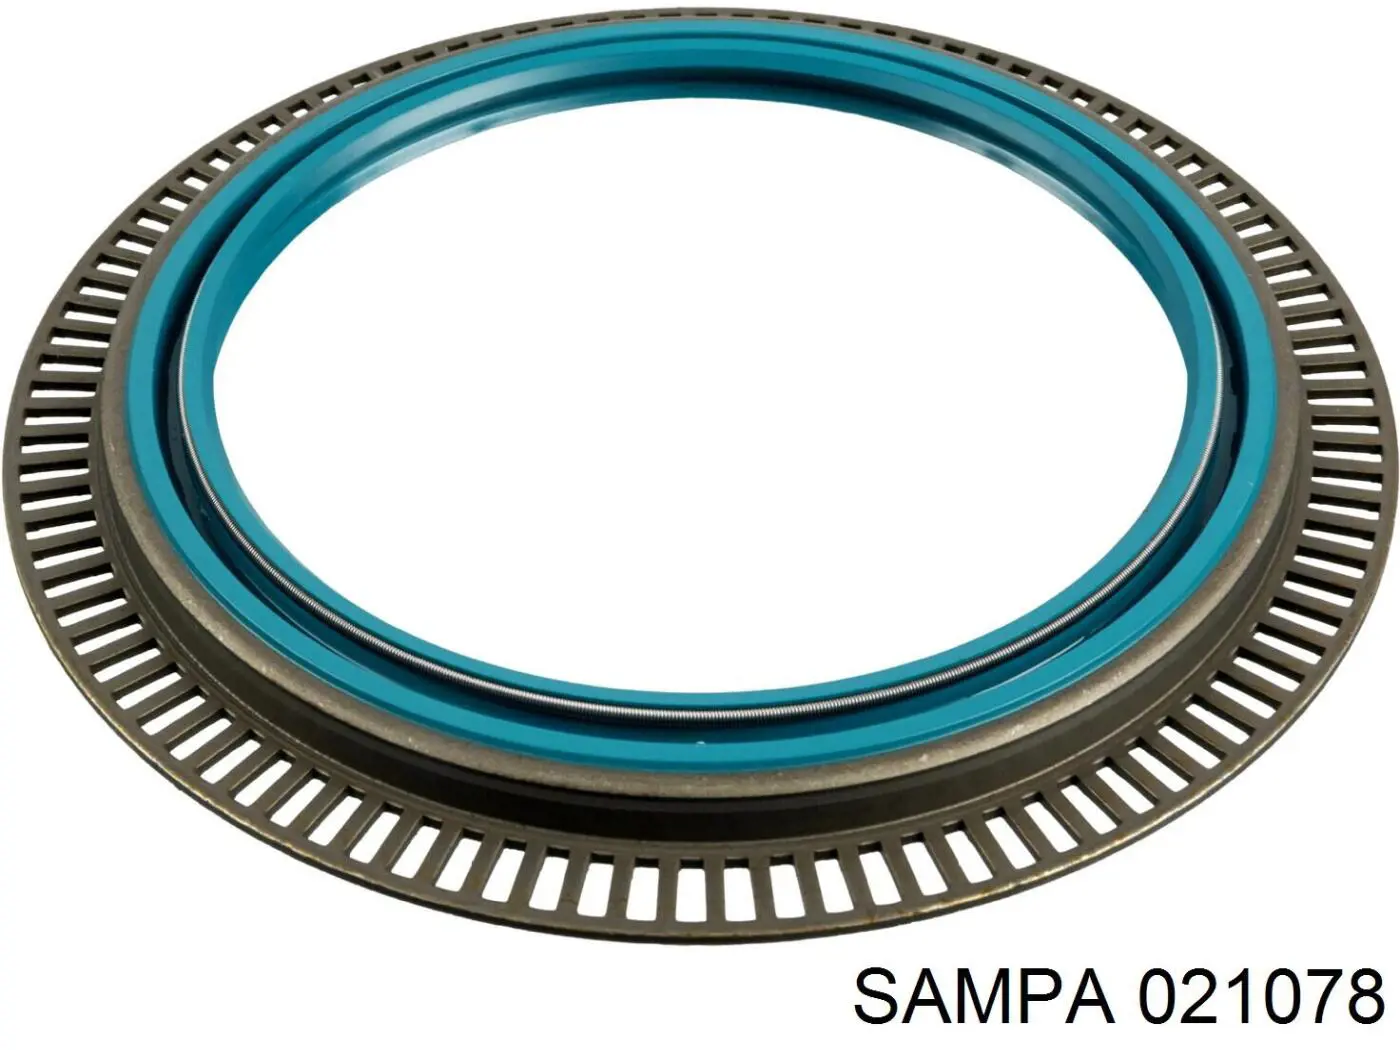 021078 Sampa Otomotiv‏ anillo retén de semieje, eje trasero, exterior